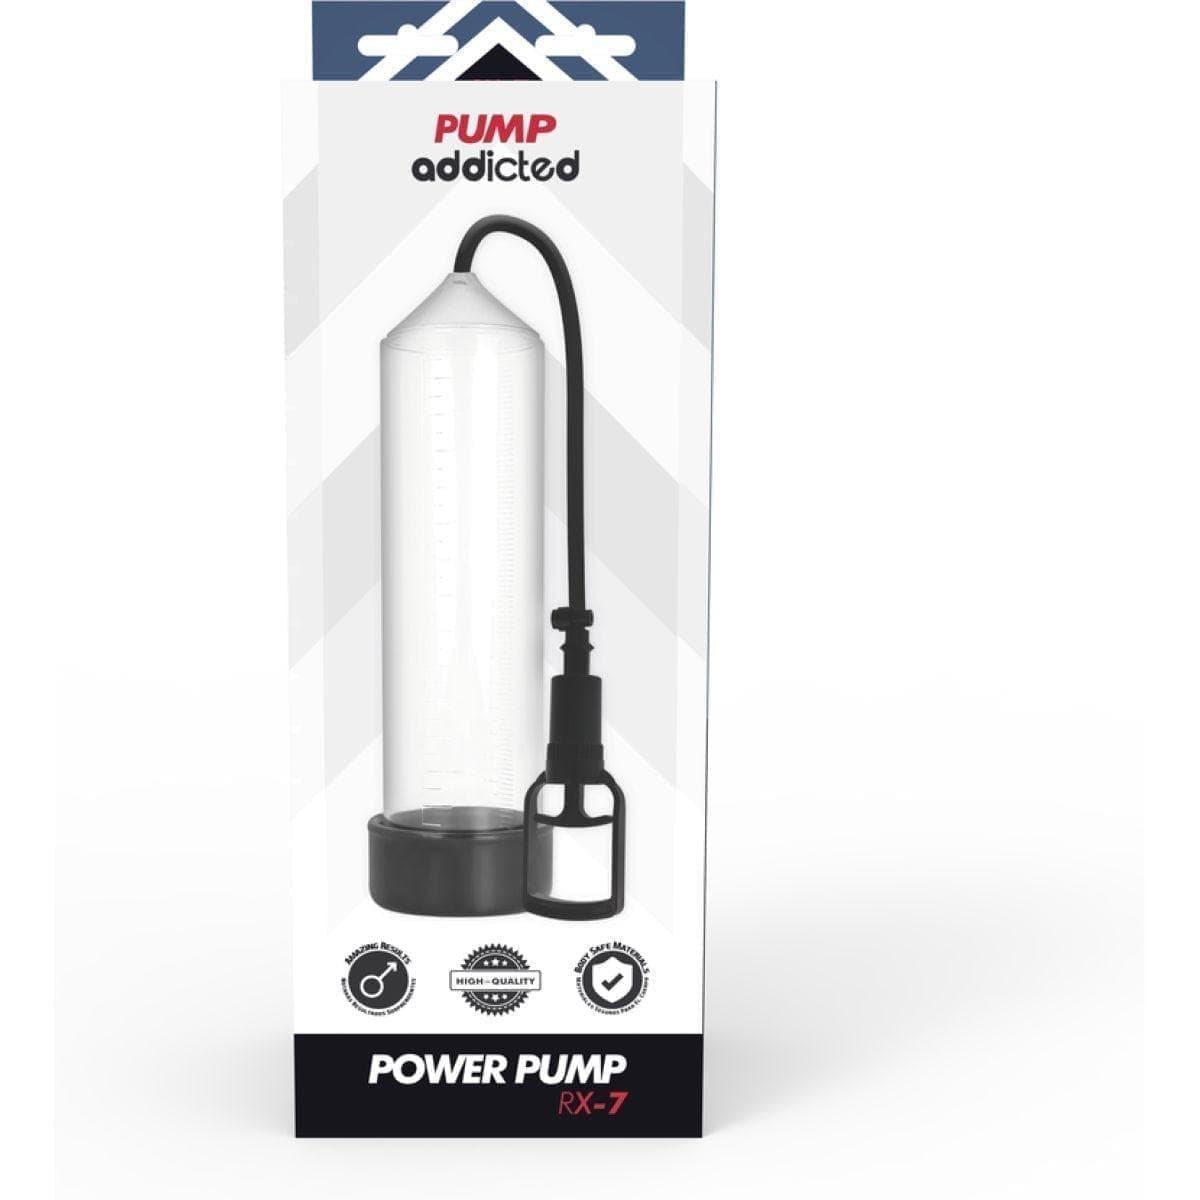 Power Pump RX-7 Transparente, 23cm Ø6cm  Pump Addicted   